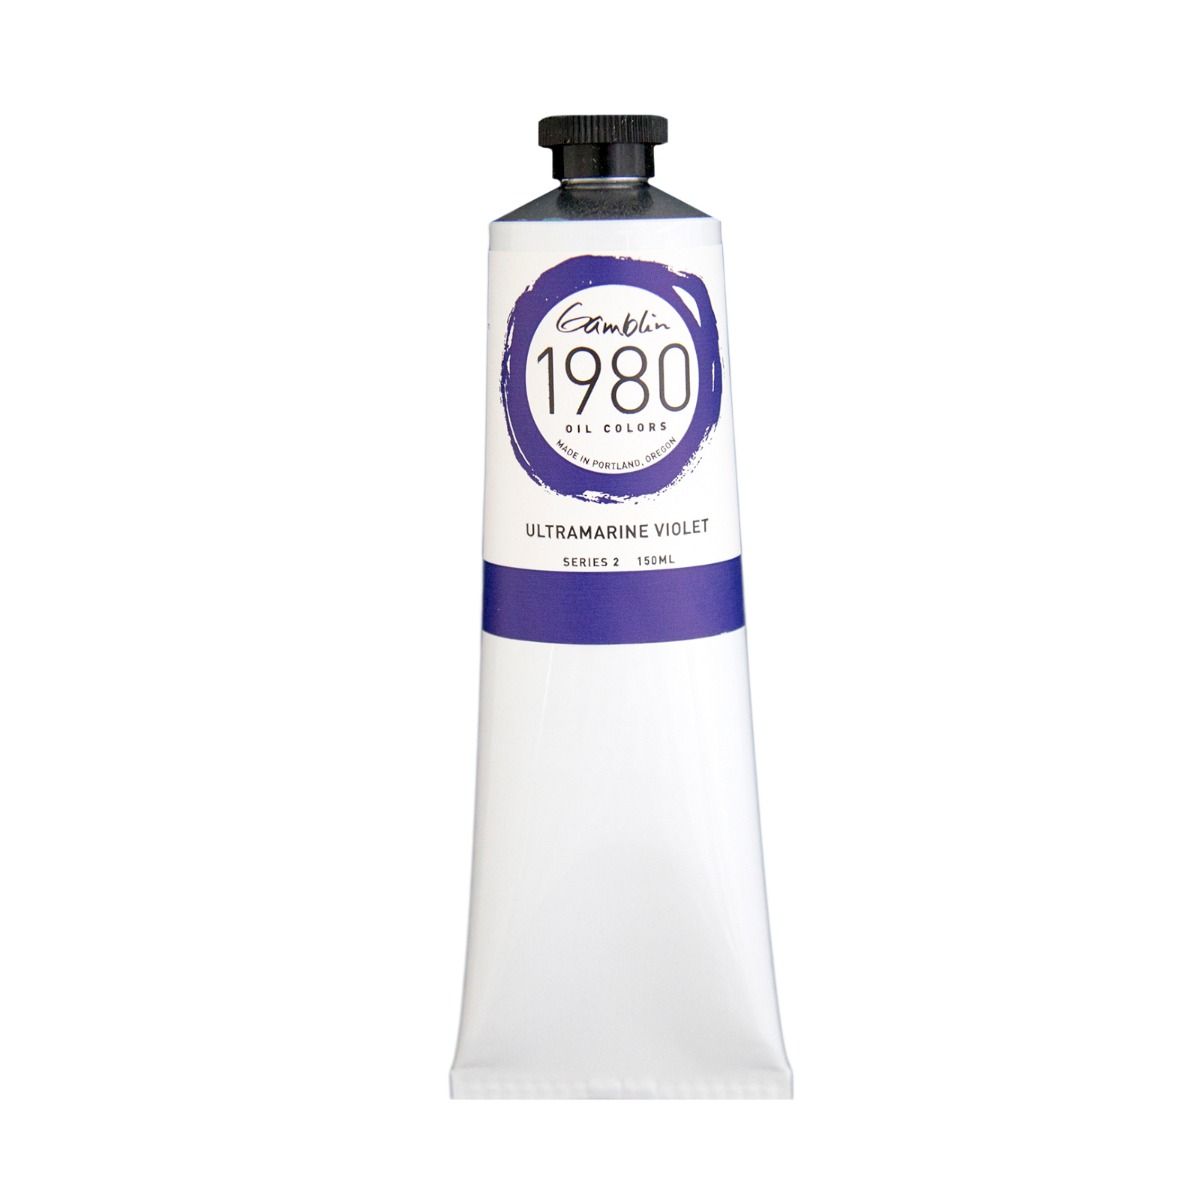 Gamblin 1980 Oils - Ultramarine Violet, 150 ml (5.07oz)